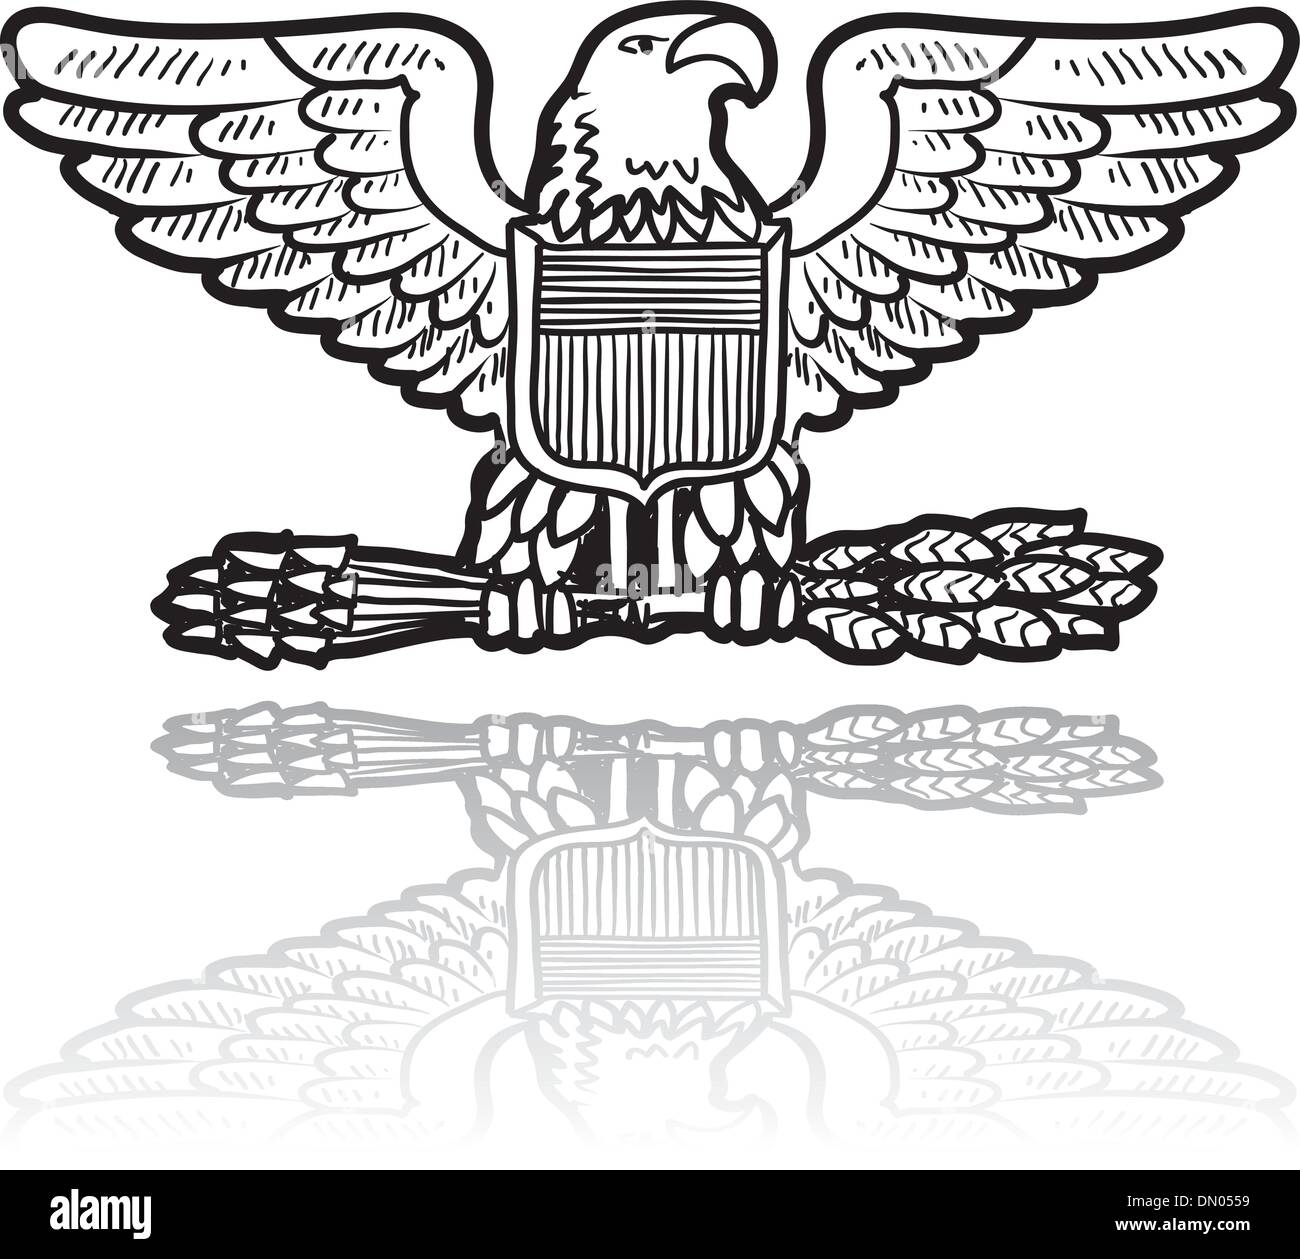 US-Militär Eagle Vector Abzeichen Stock Vektor